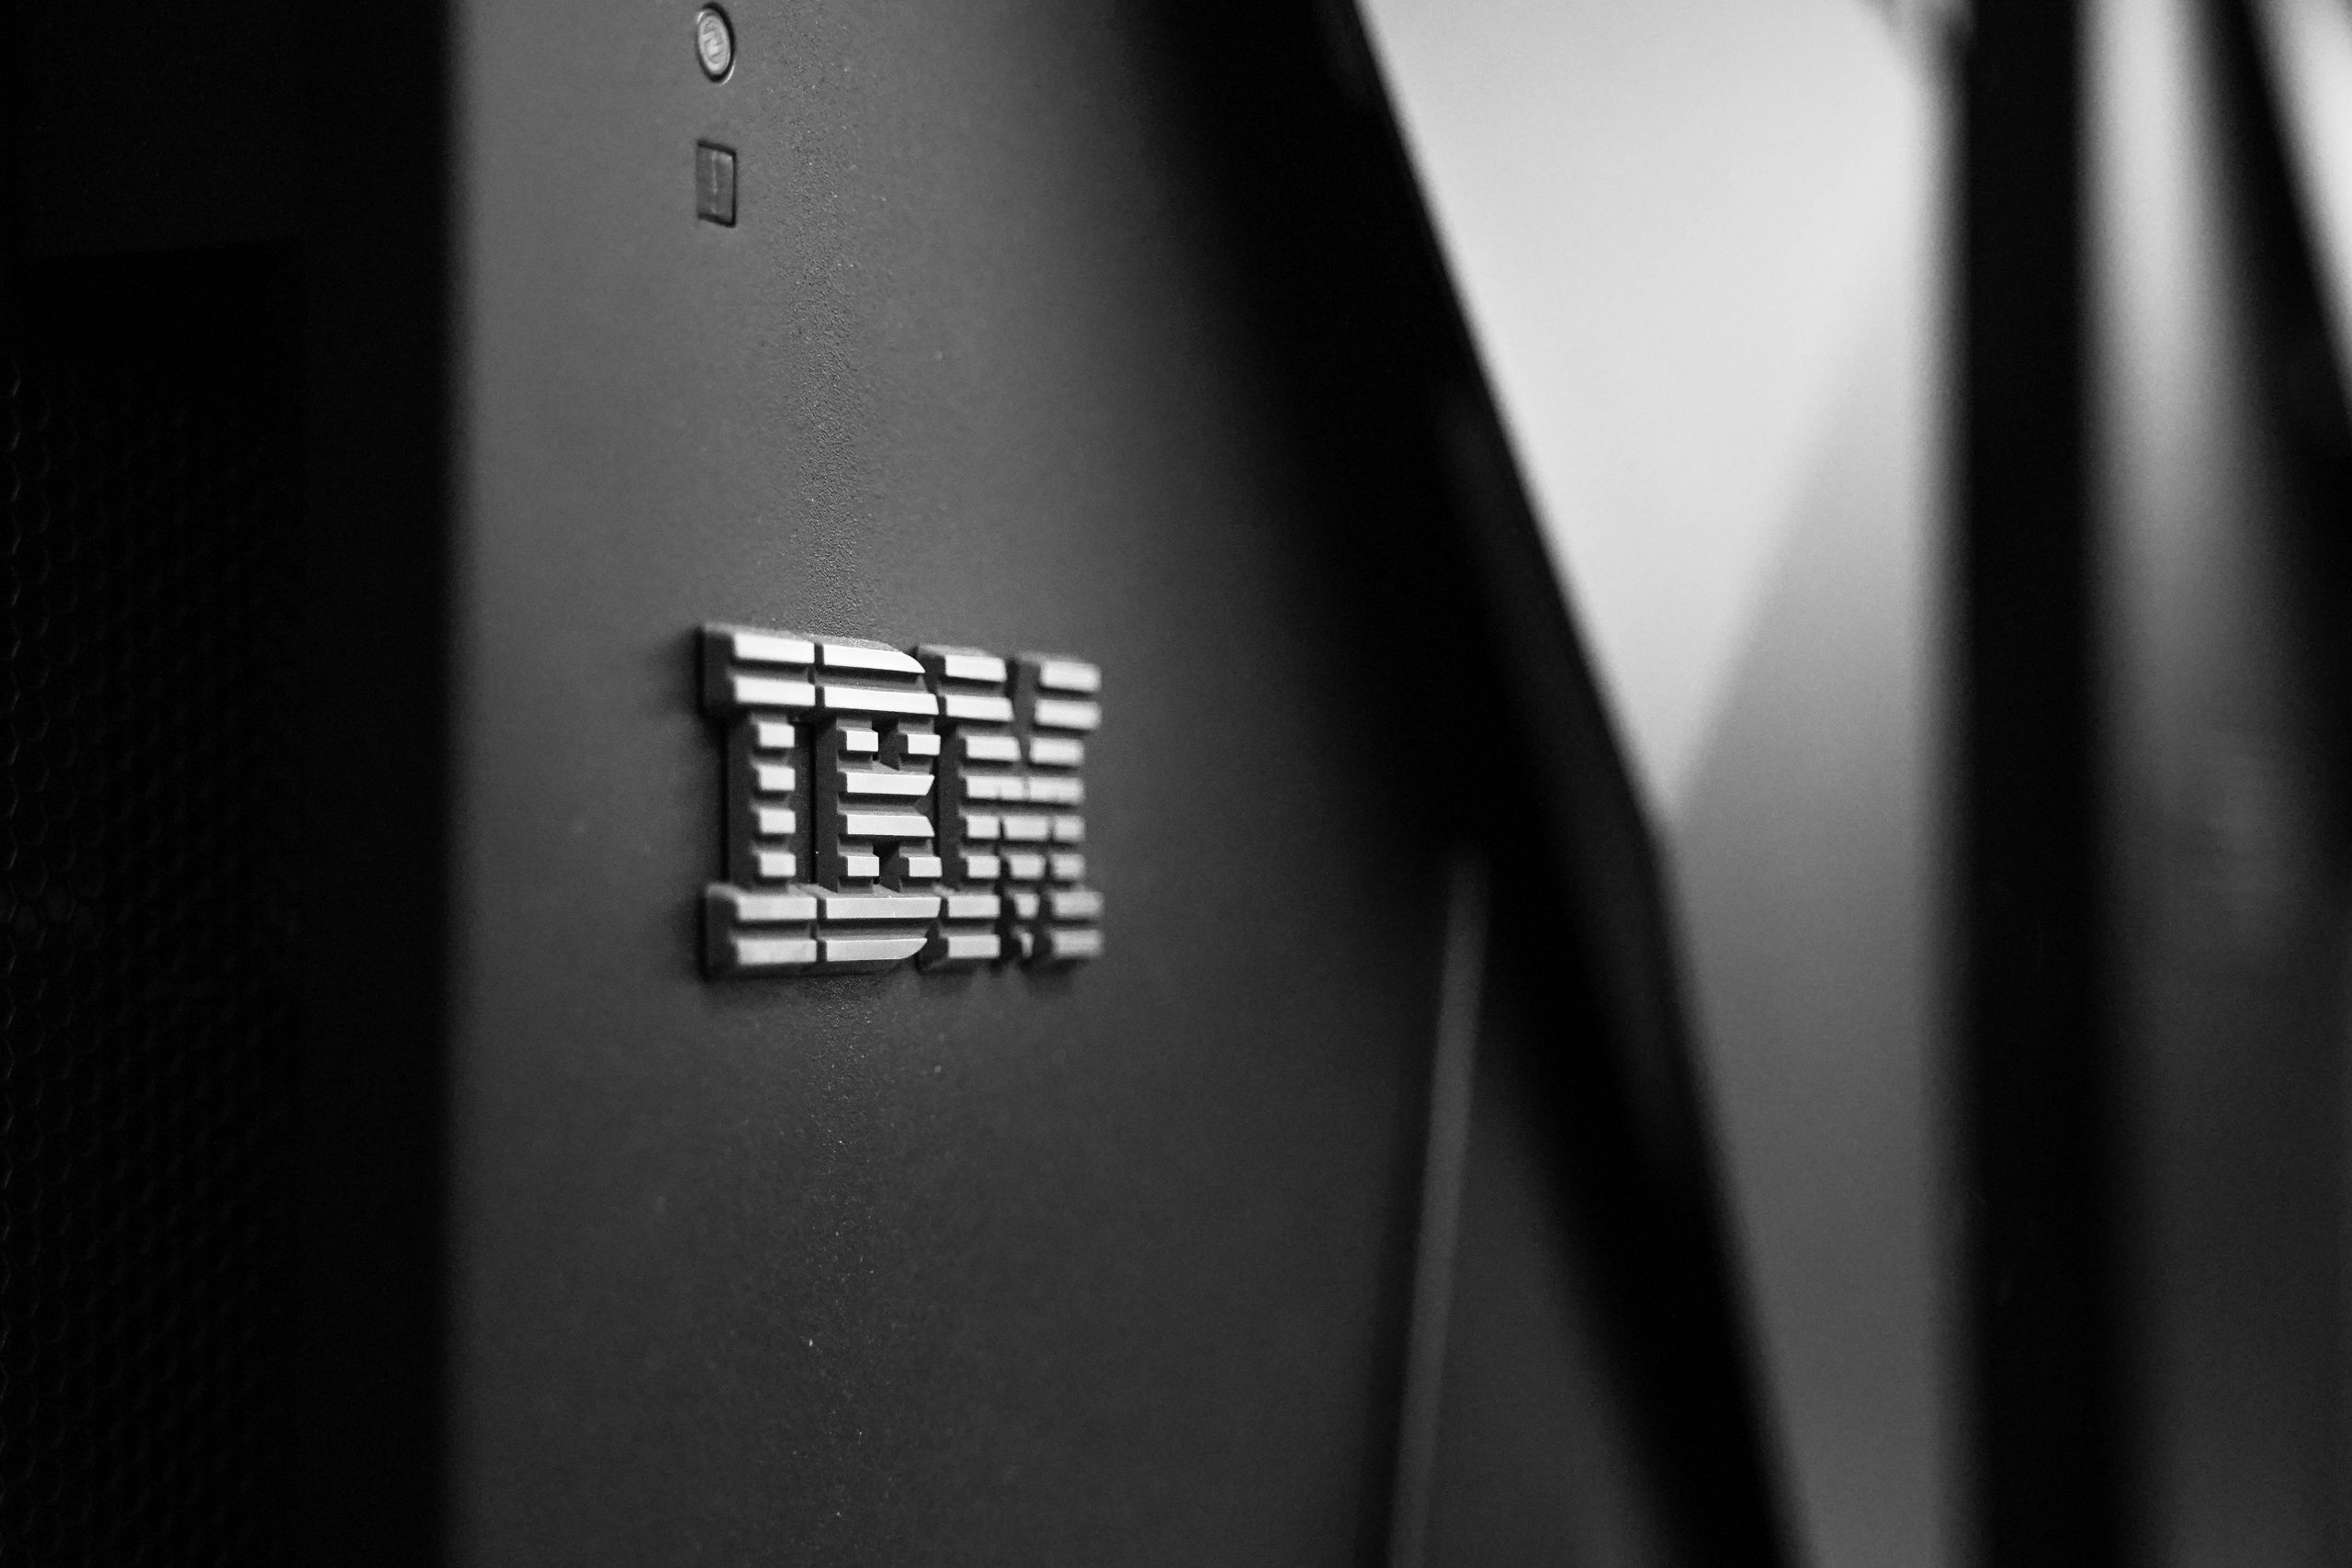 Cashflow Profi IBM: Auf dem Weg zum KI-Marktführer​